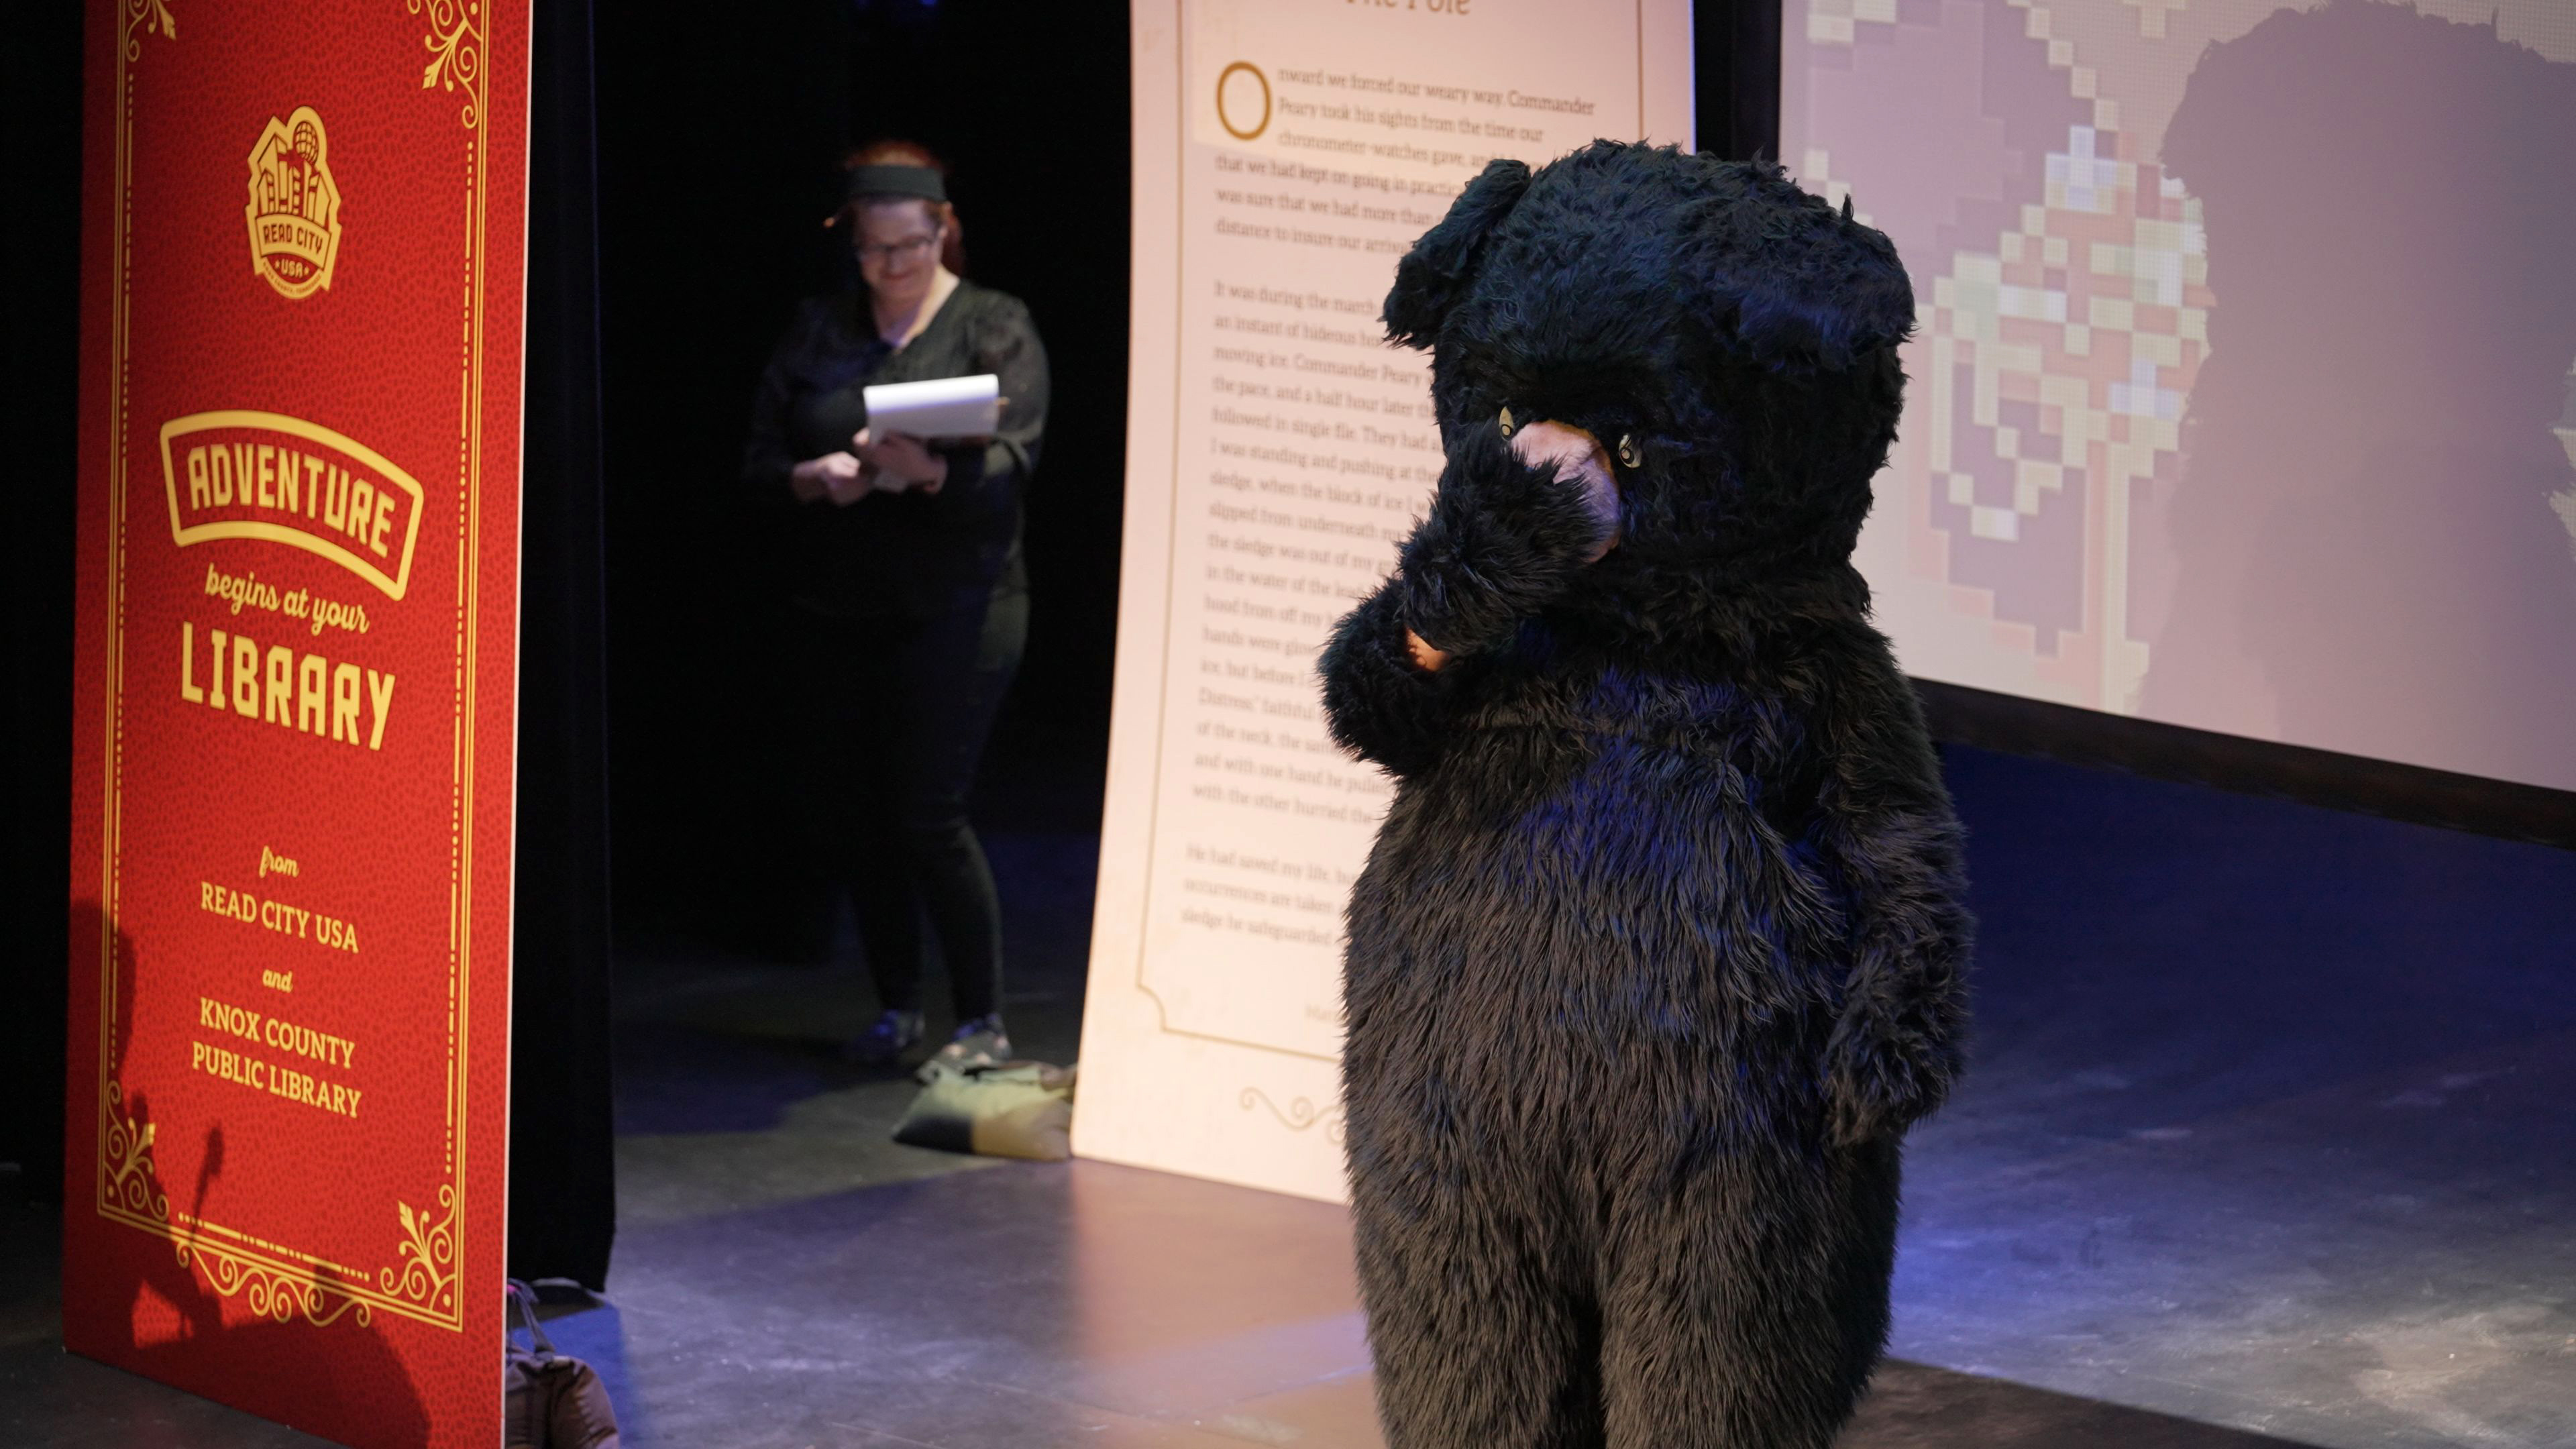 costume bear making embarrassed gesture